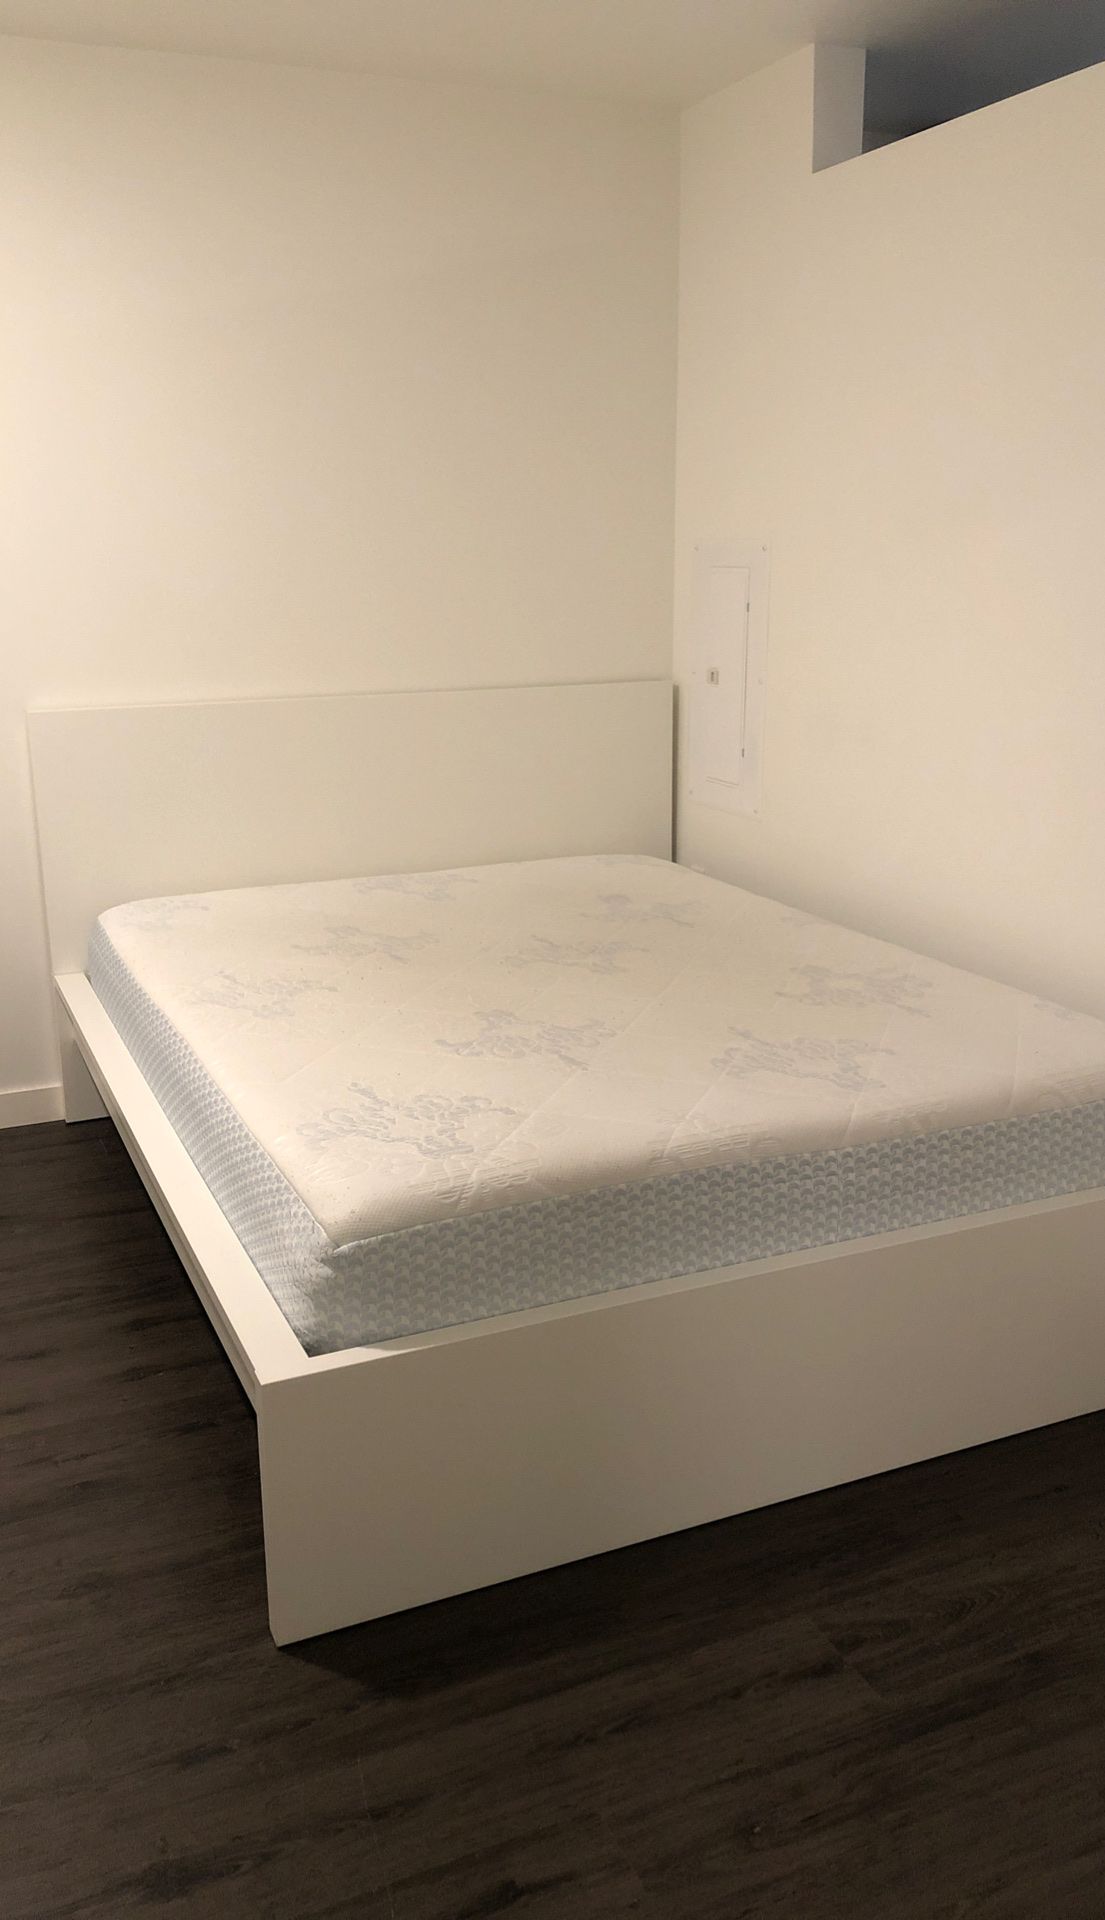 IKEA MALM WHITE BED FRAME